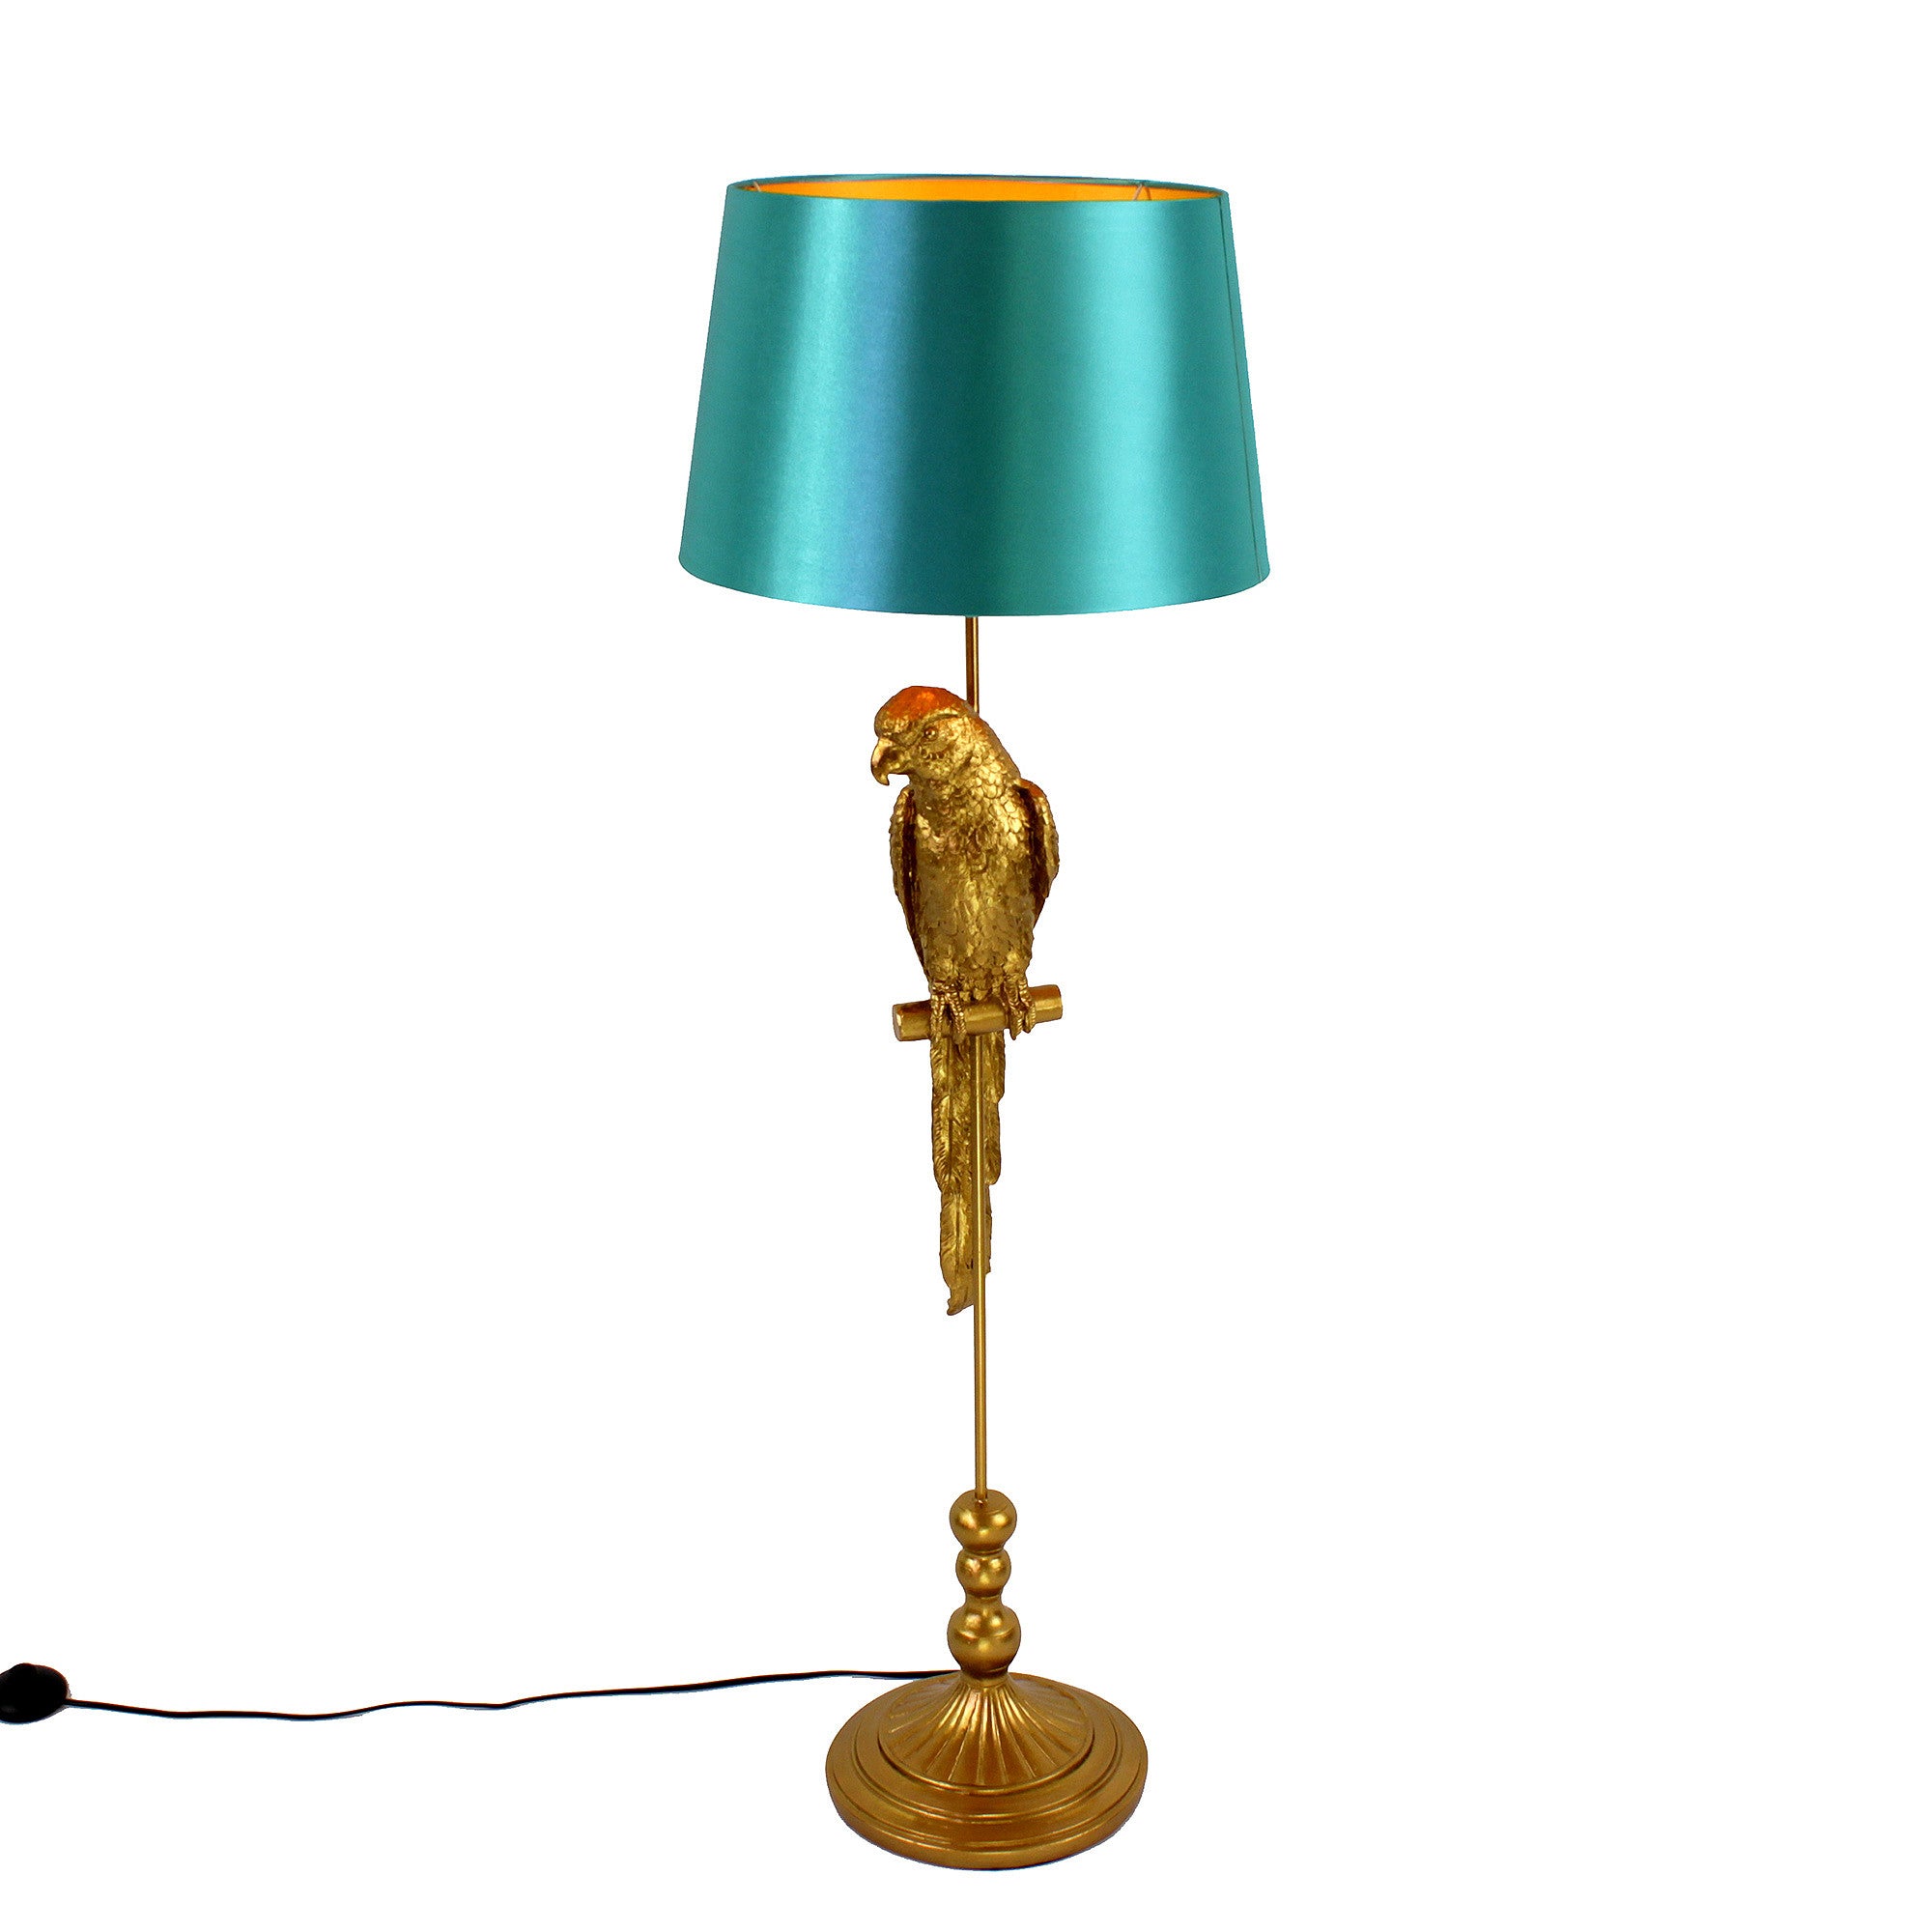 Orelia Golden Parrot Floor Lamp | Turquoise Shade